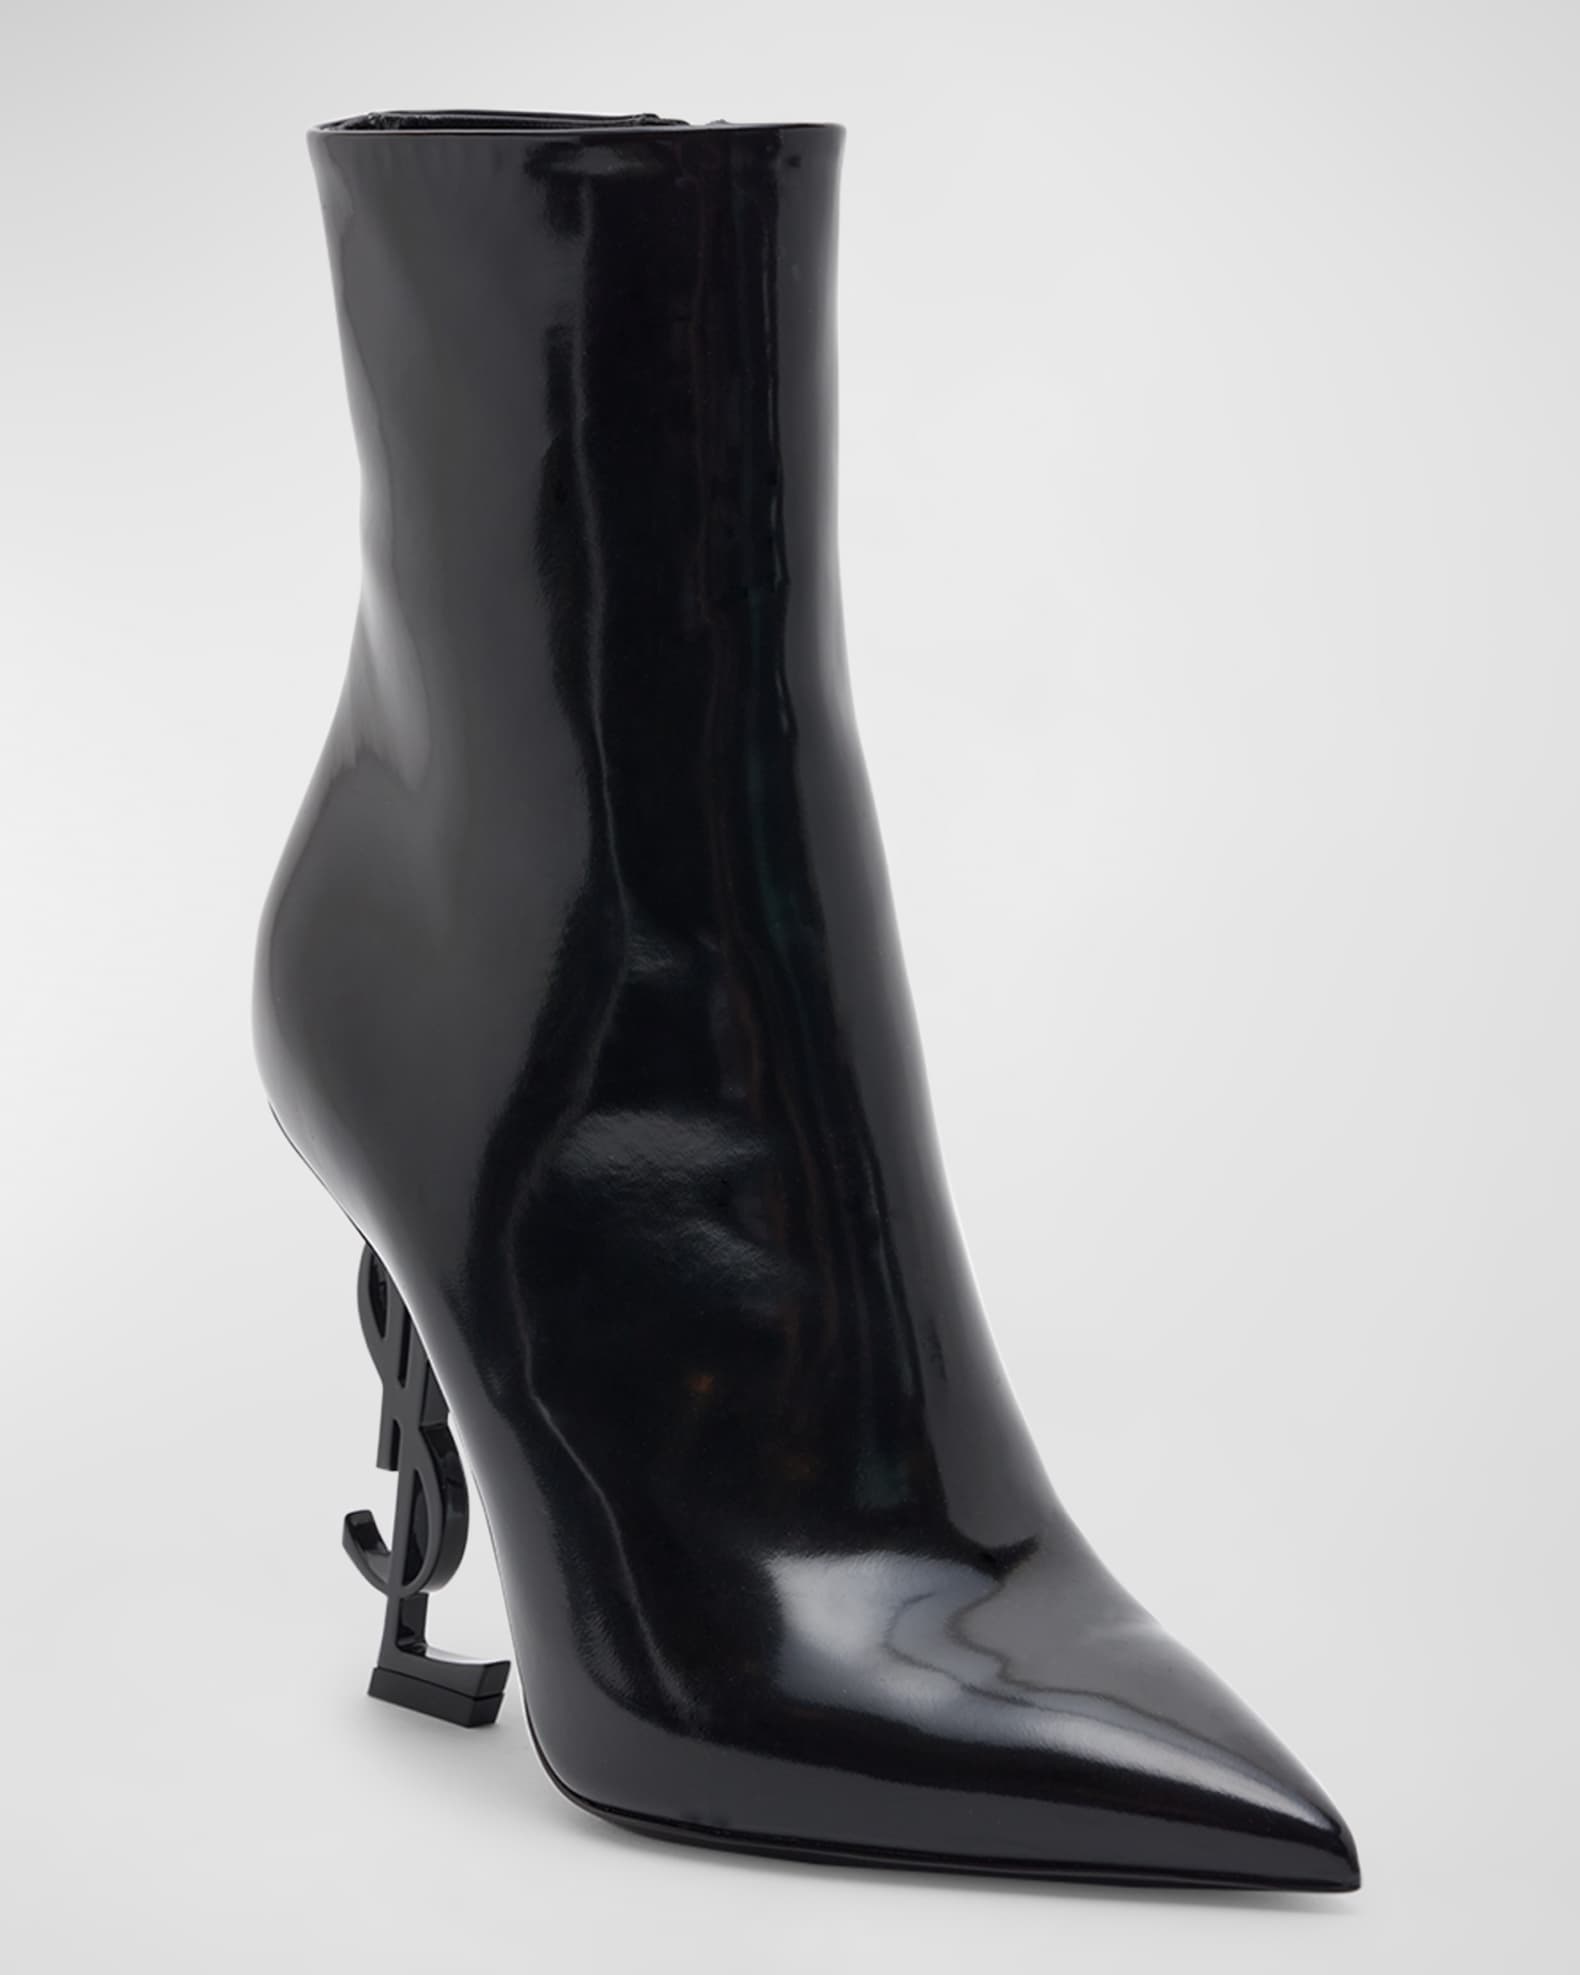 Saint Laurent Opyum YSL Logo-Heel Sandals with Black Hardware